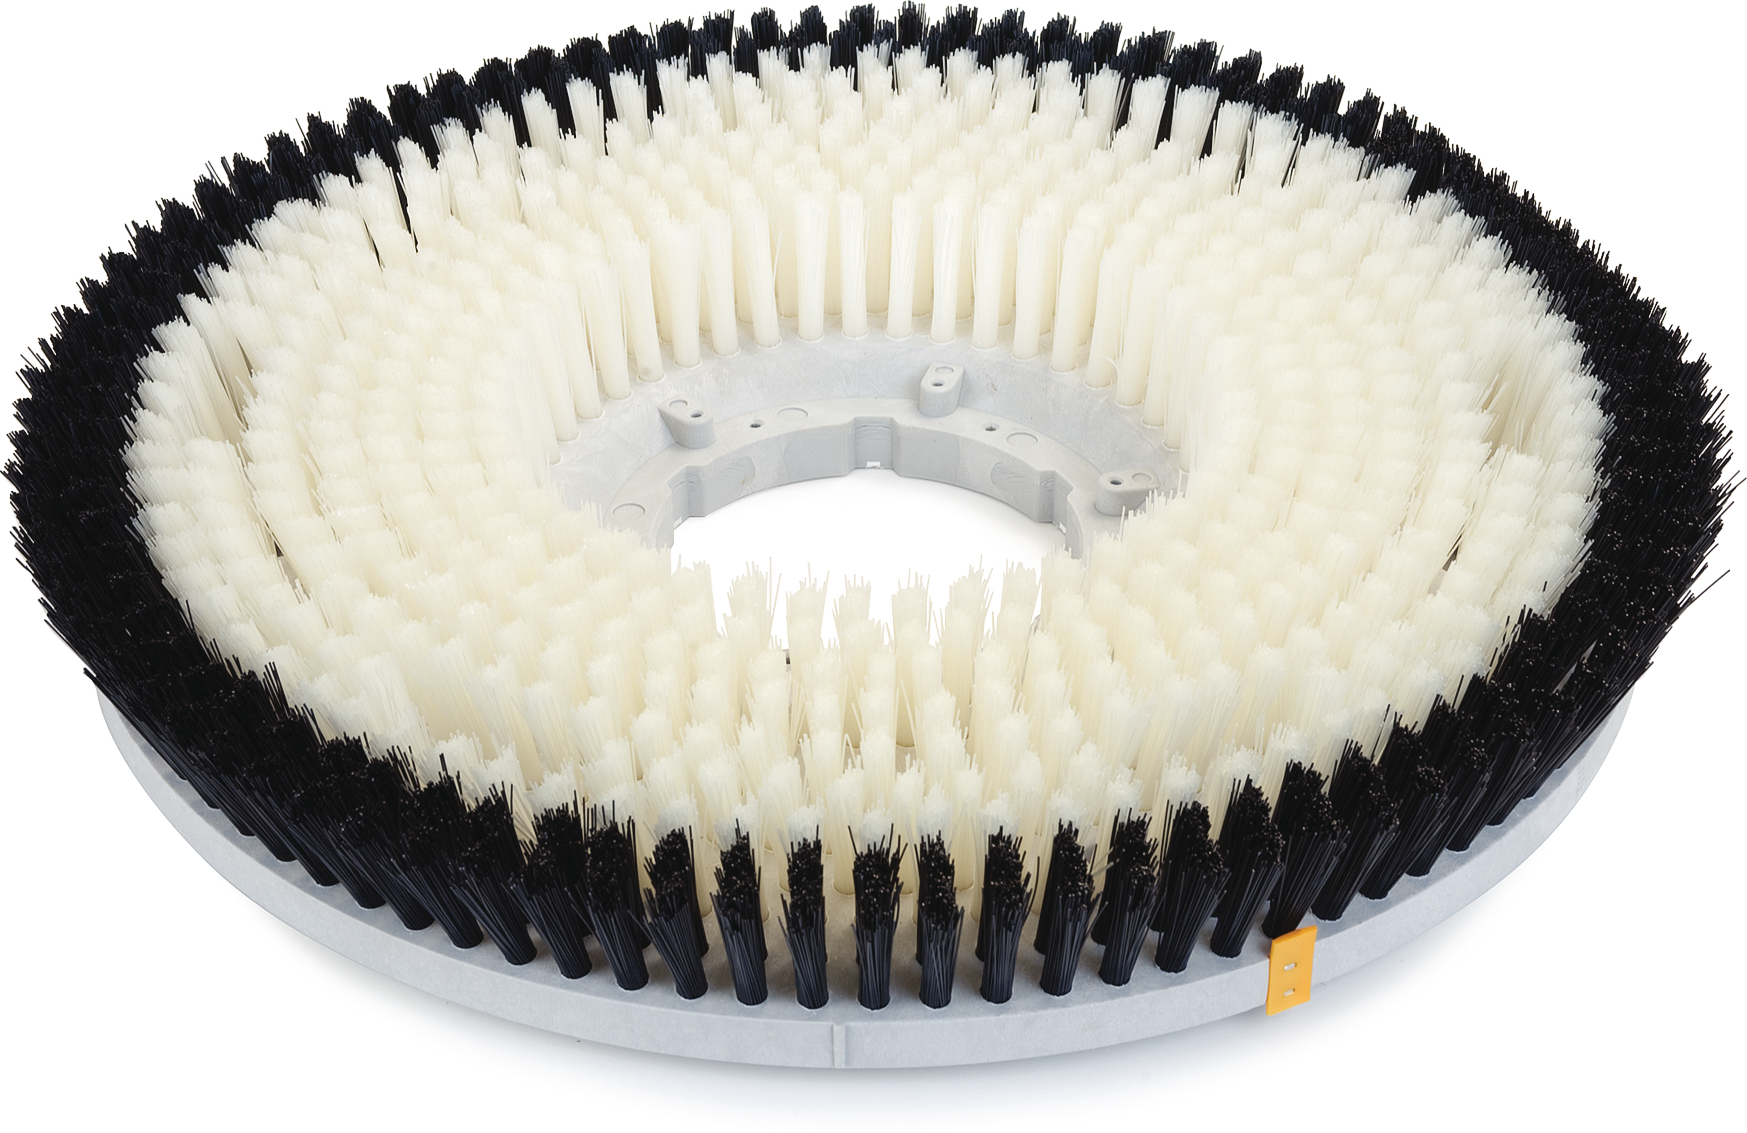 Colortech White-Black Karpet Kare Nylon Brush 13 - White-Black